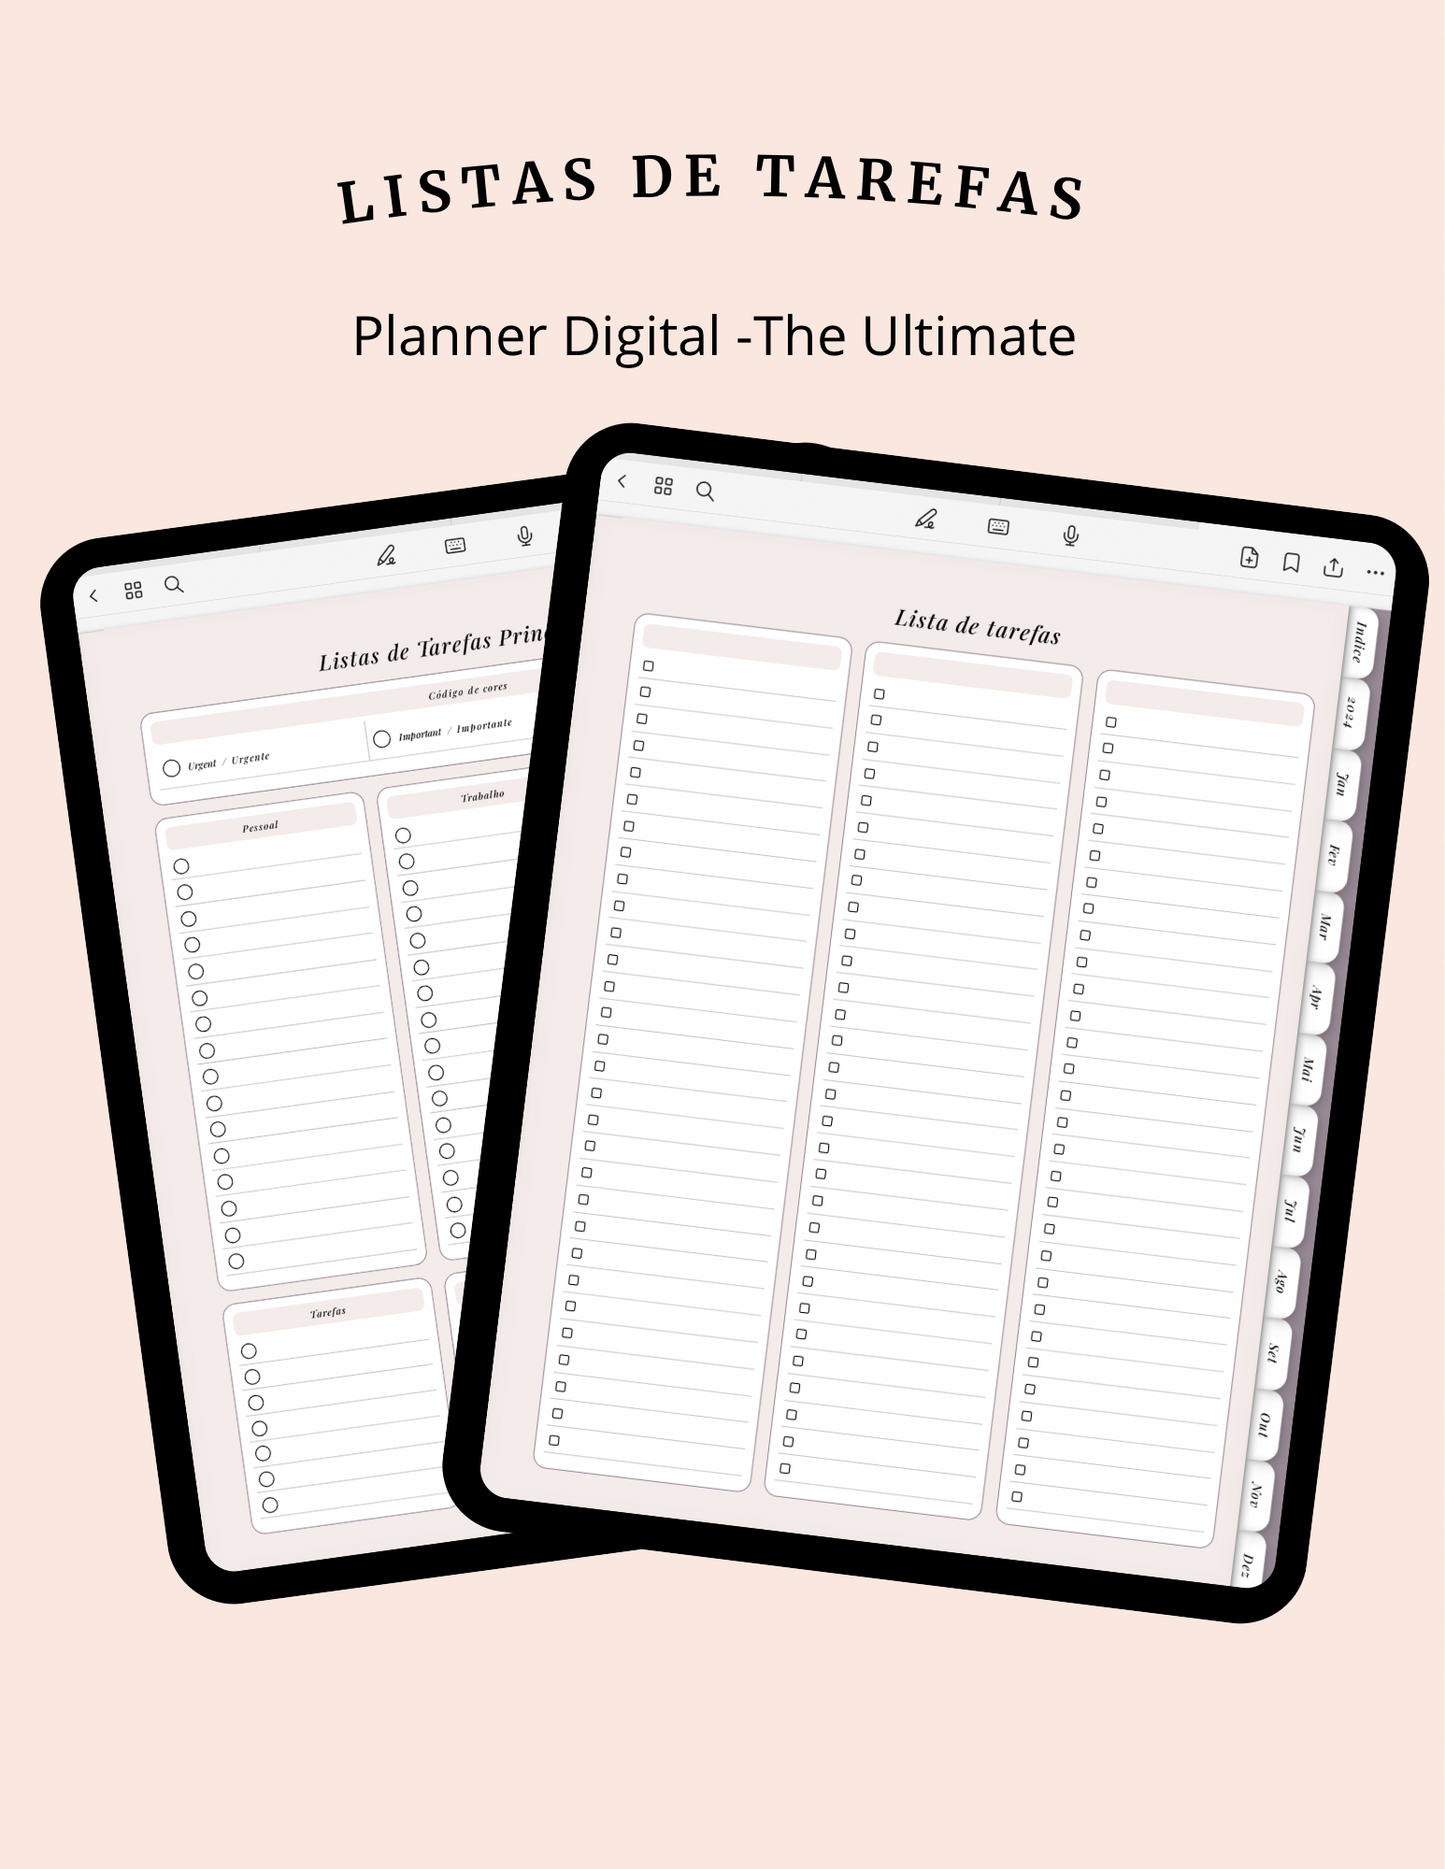 Combo Digital Planner 2024 - The Ultimate Decore com Adesivos Digitais